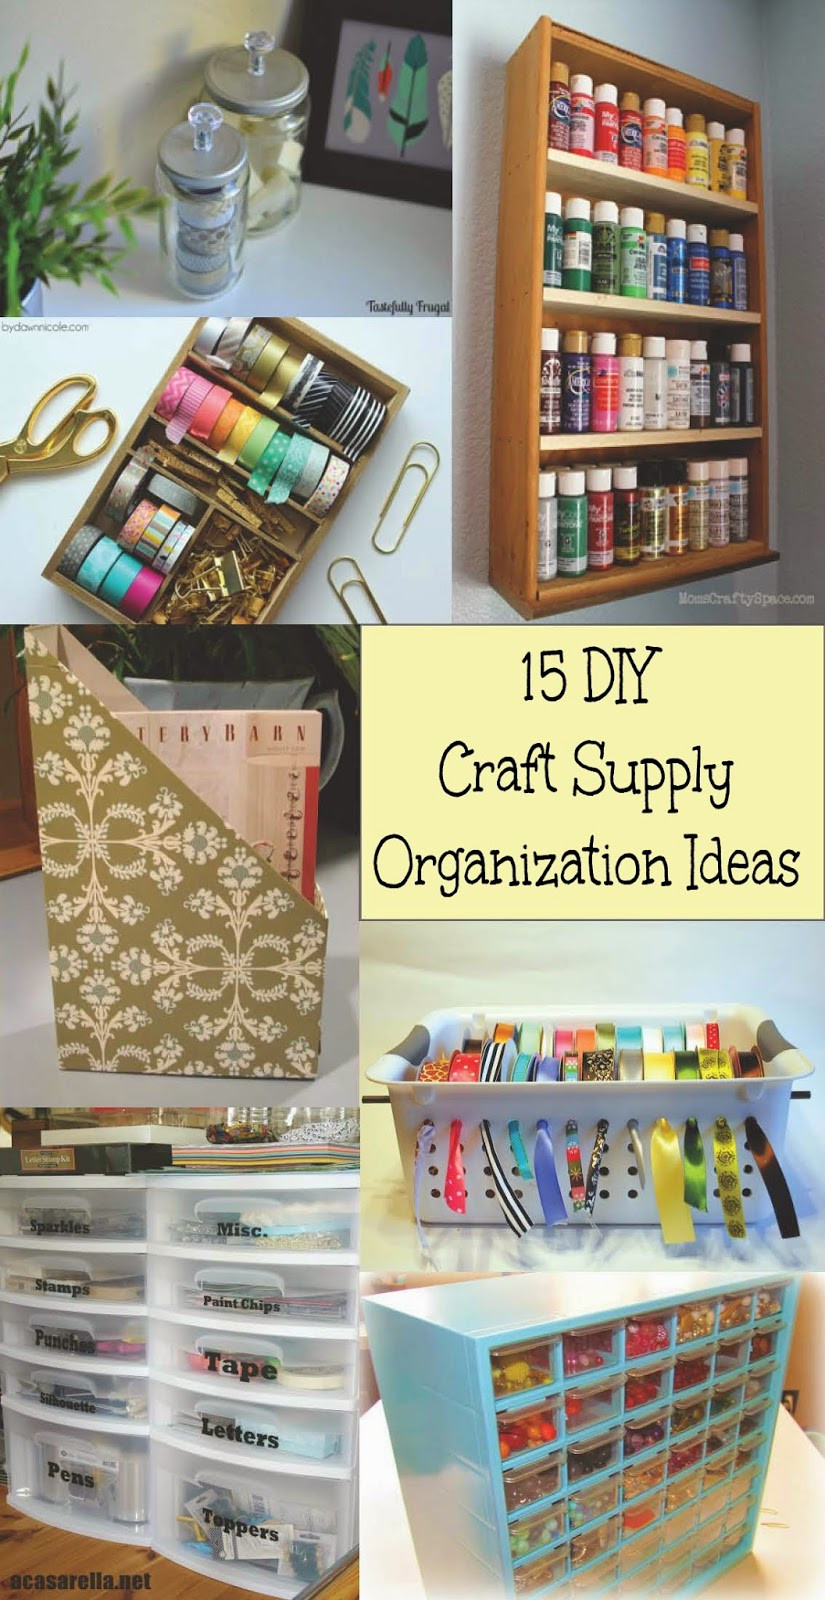 Craft Supply Organization Ideas
 15 DIY Craft Supply Organization Ideas Home Crafts by Ali